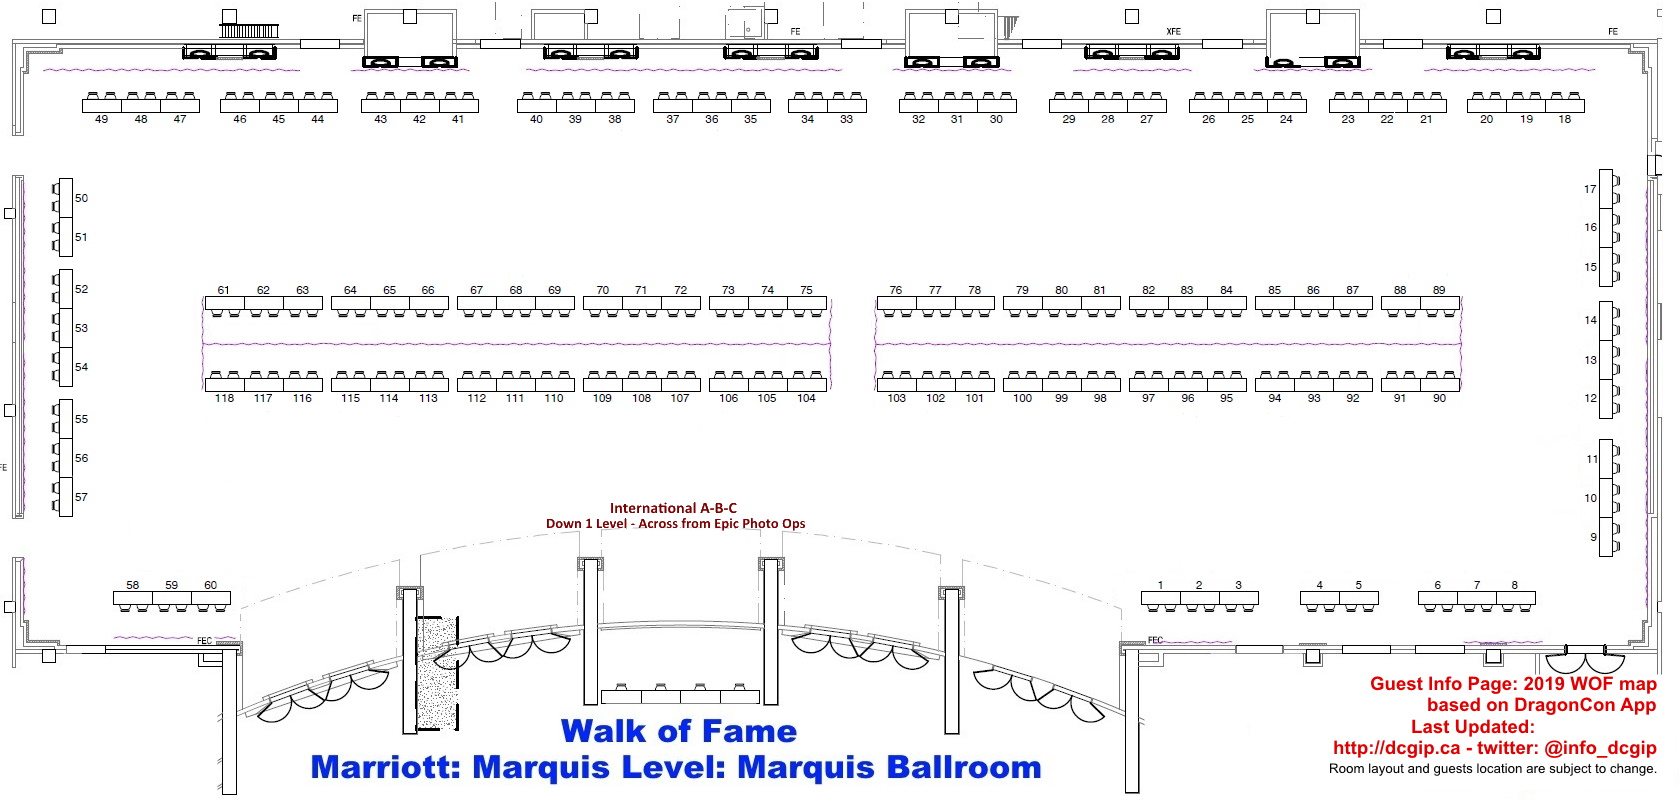 Marriott Maquis Hotel: Maquis Level (1 below lobby) - Maquis Ballroom